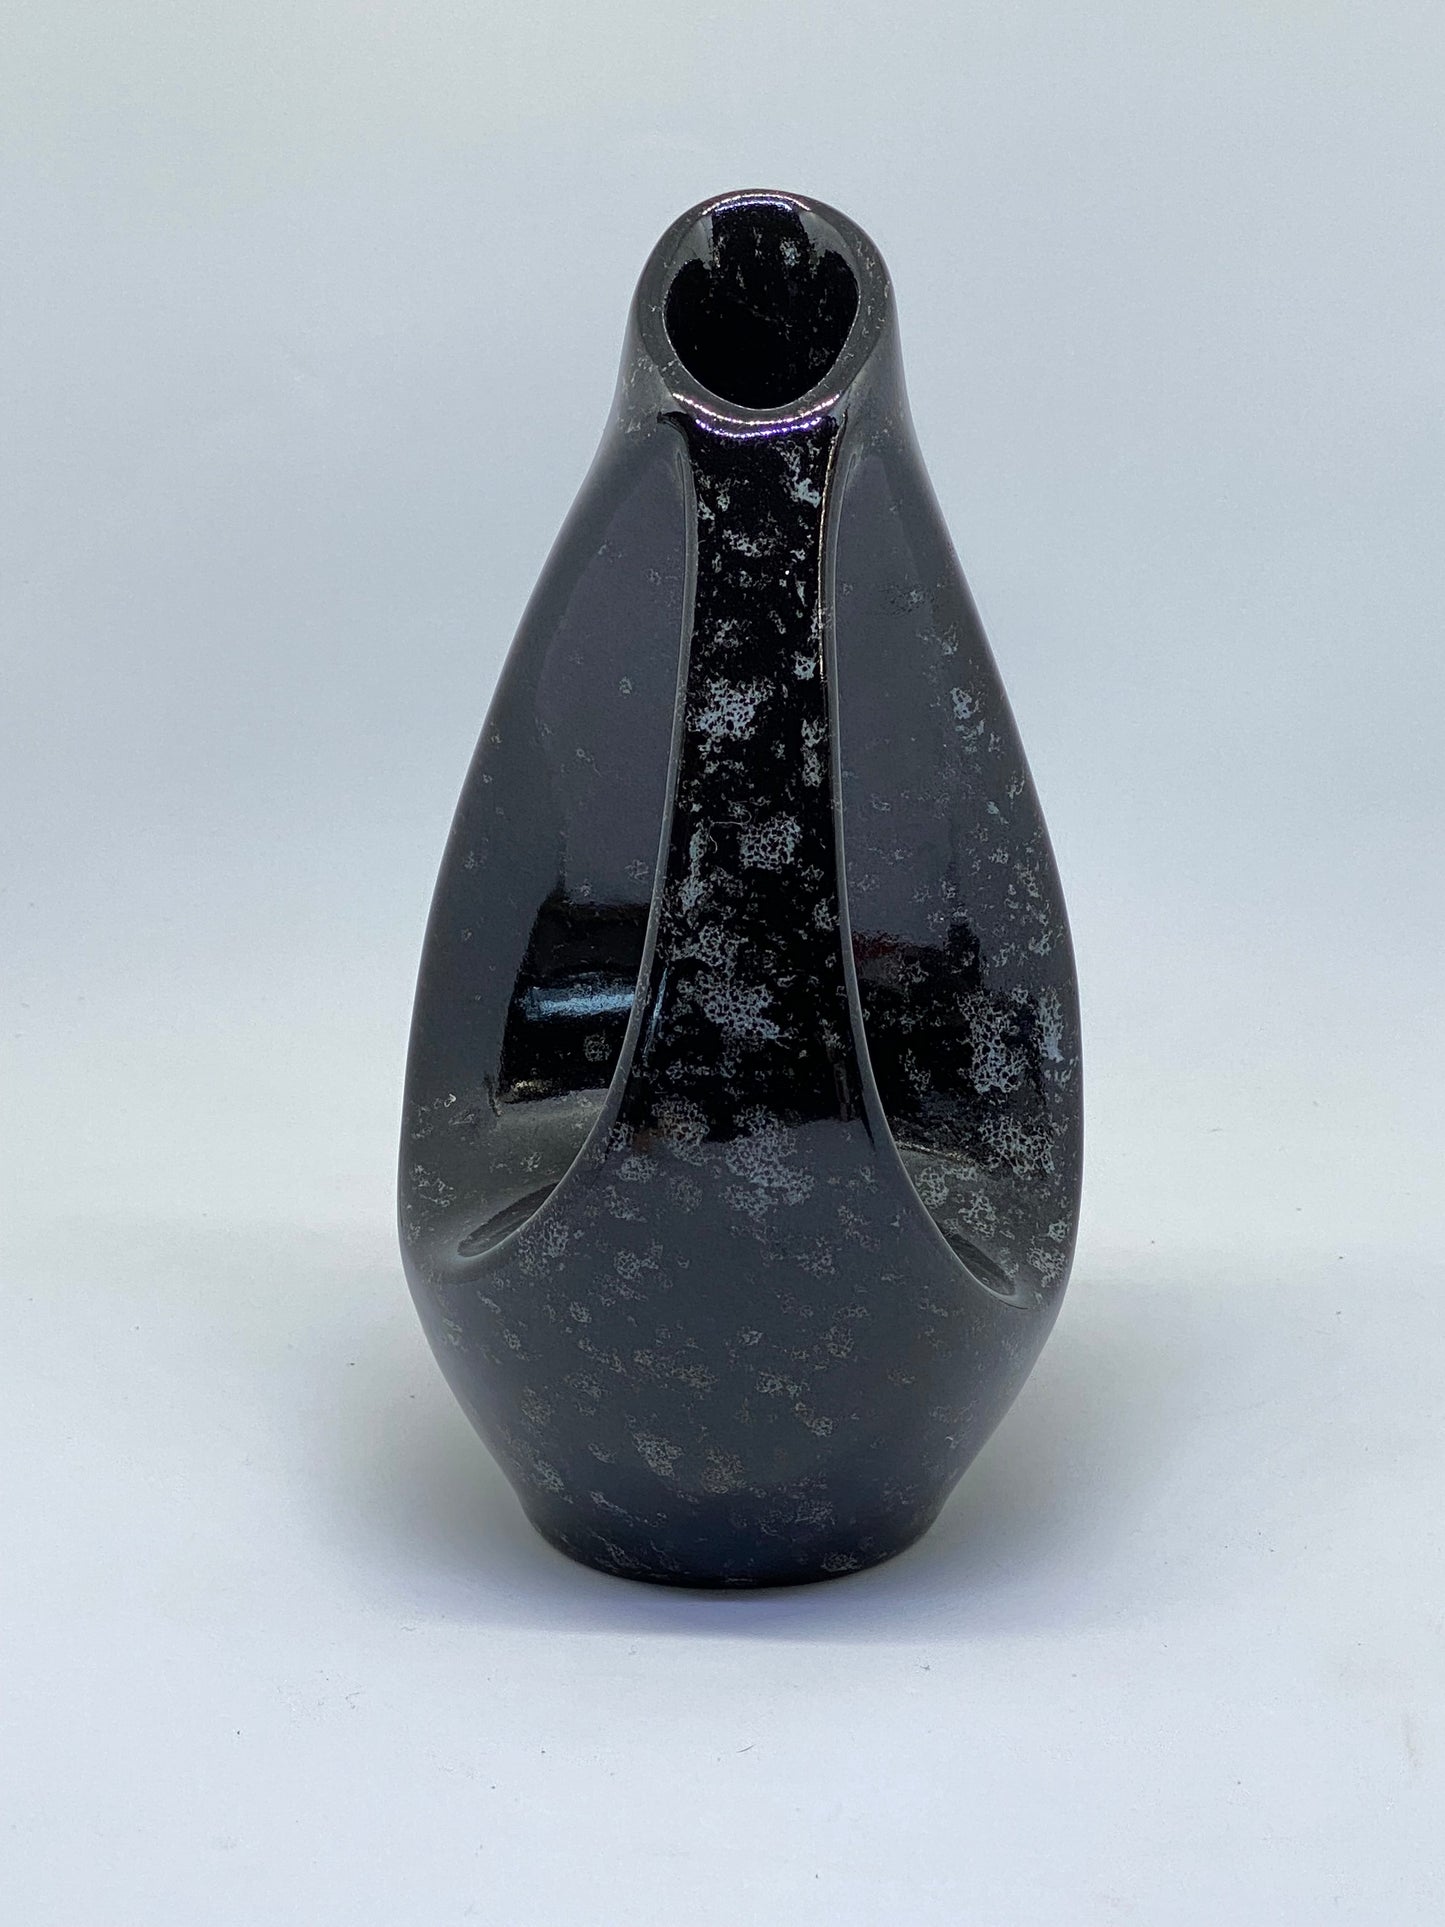 Retro/Vintage Pottery sleek and sensual water/wine jug